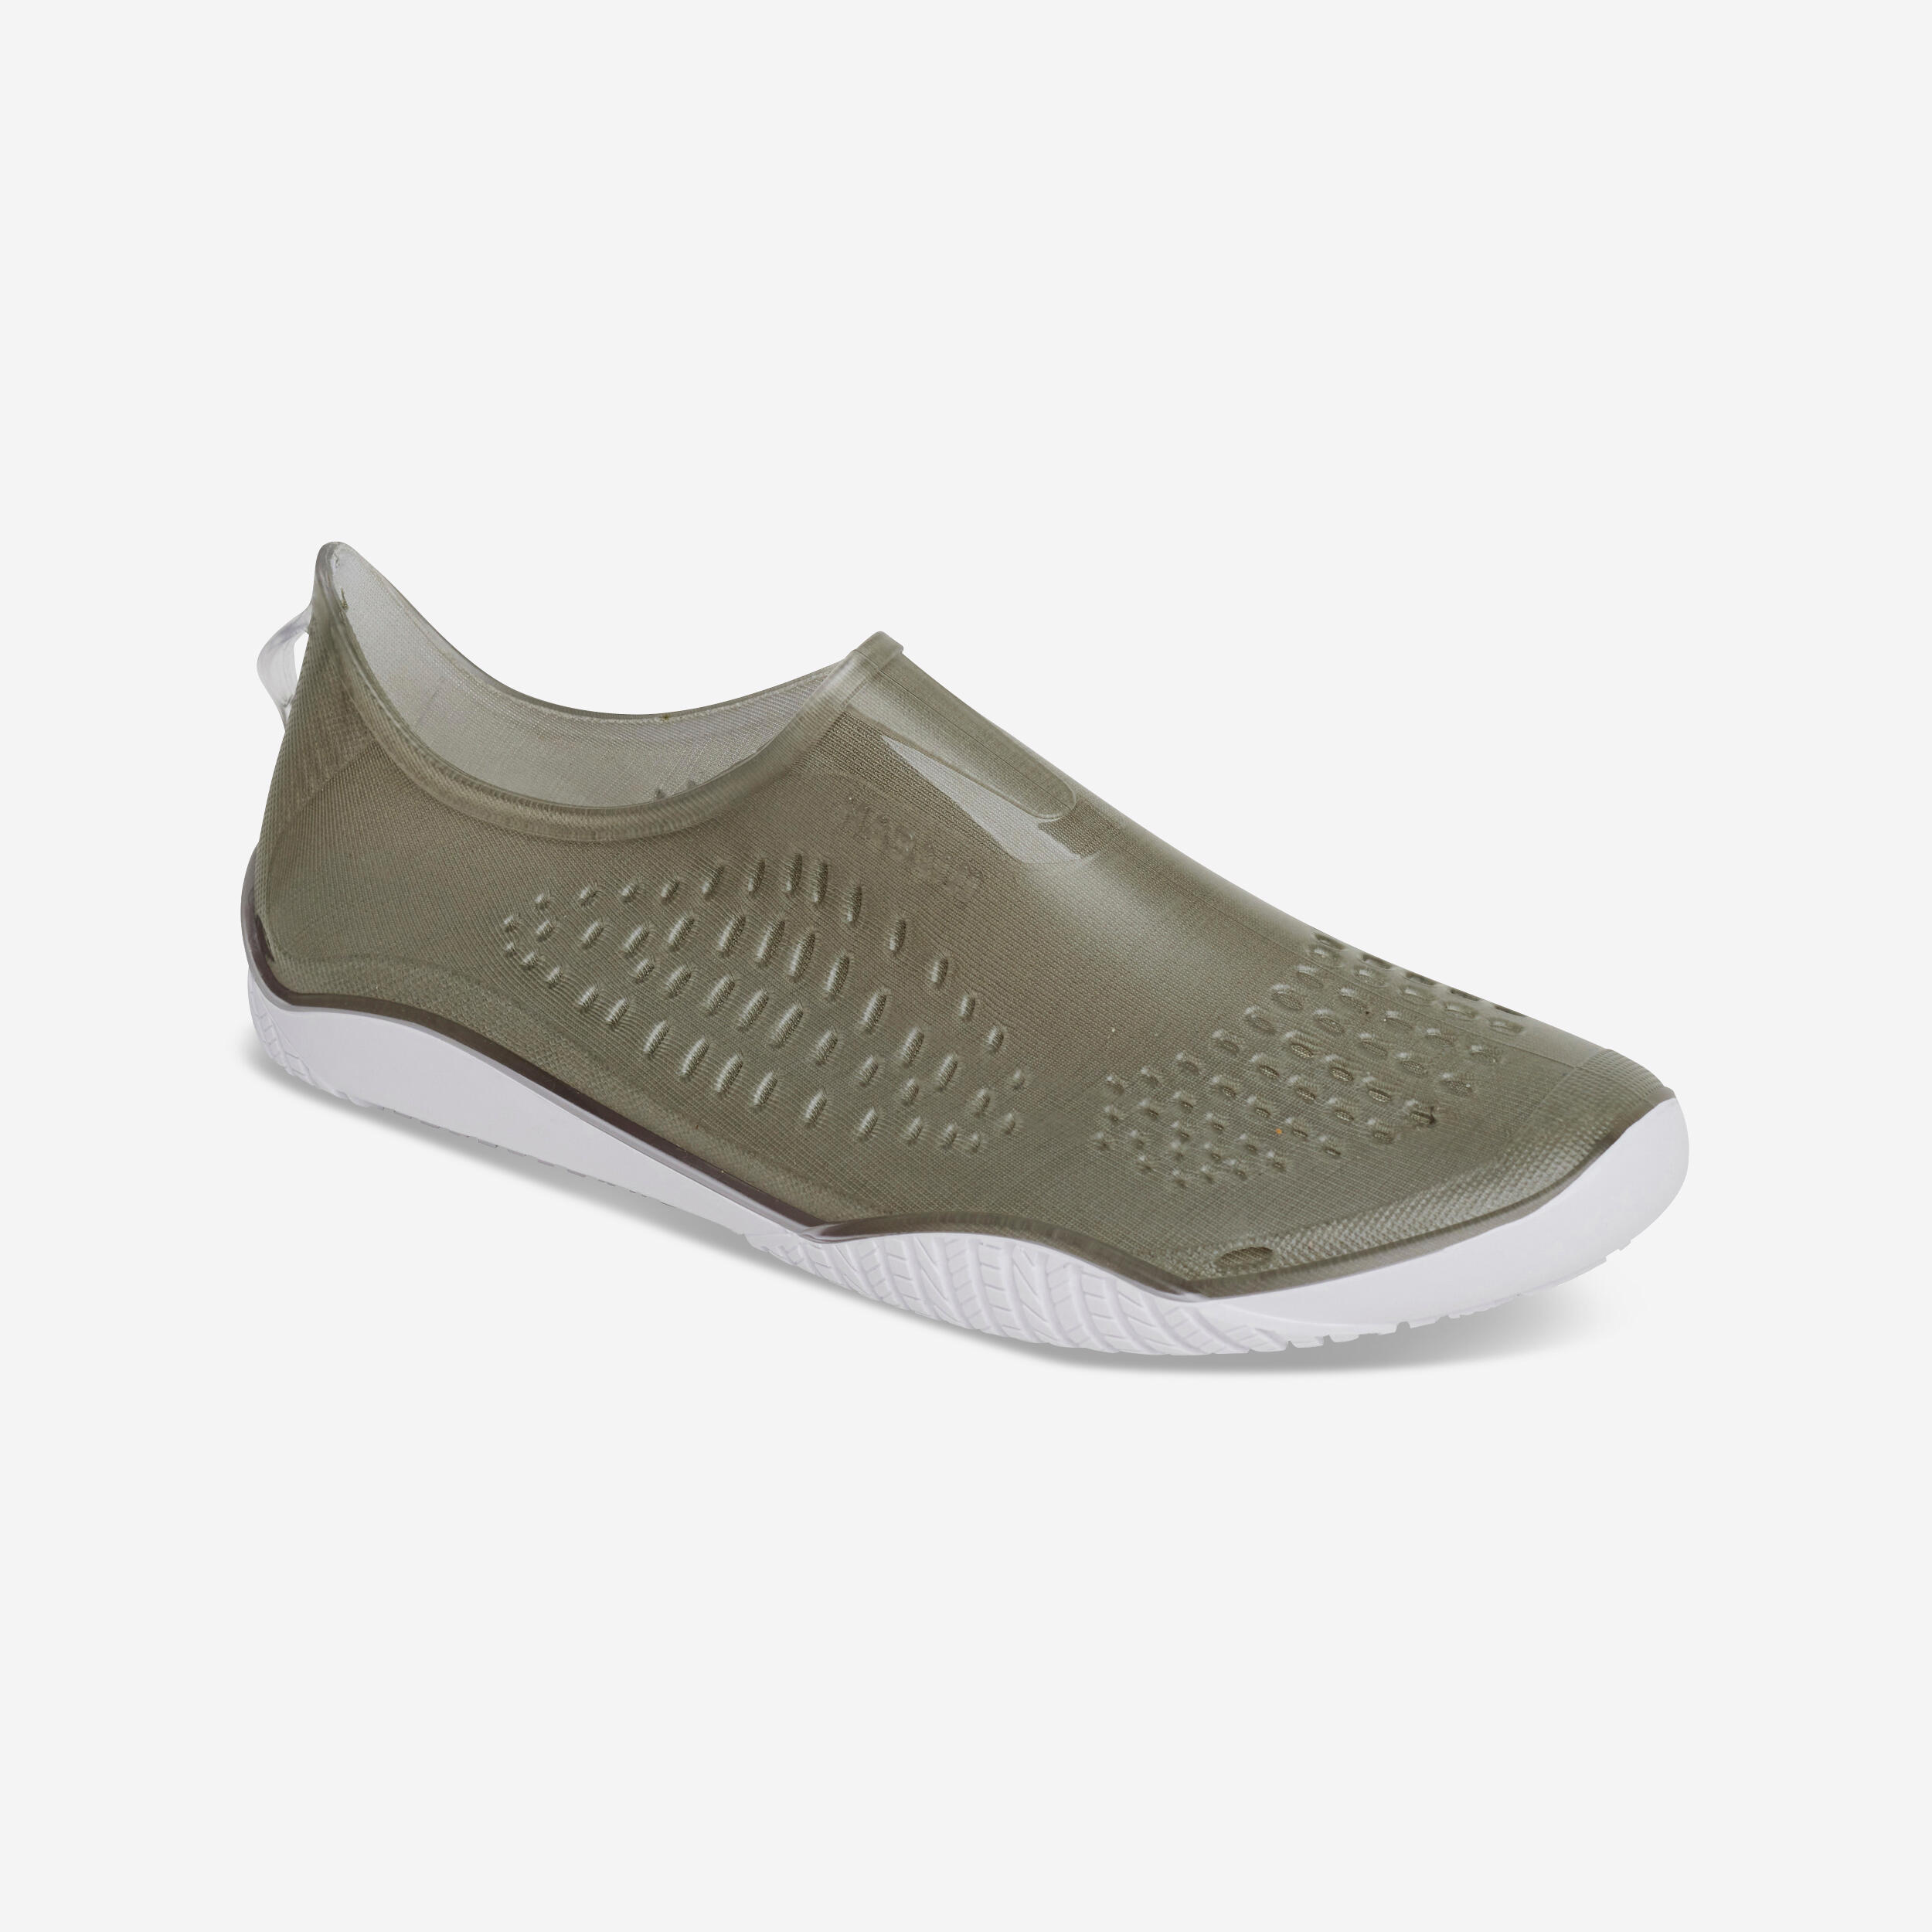 Aquabiking-Aquafit Water Shoes Fitshoe Khaki 4/8